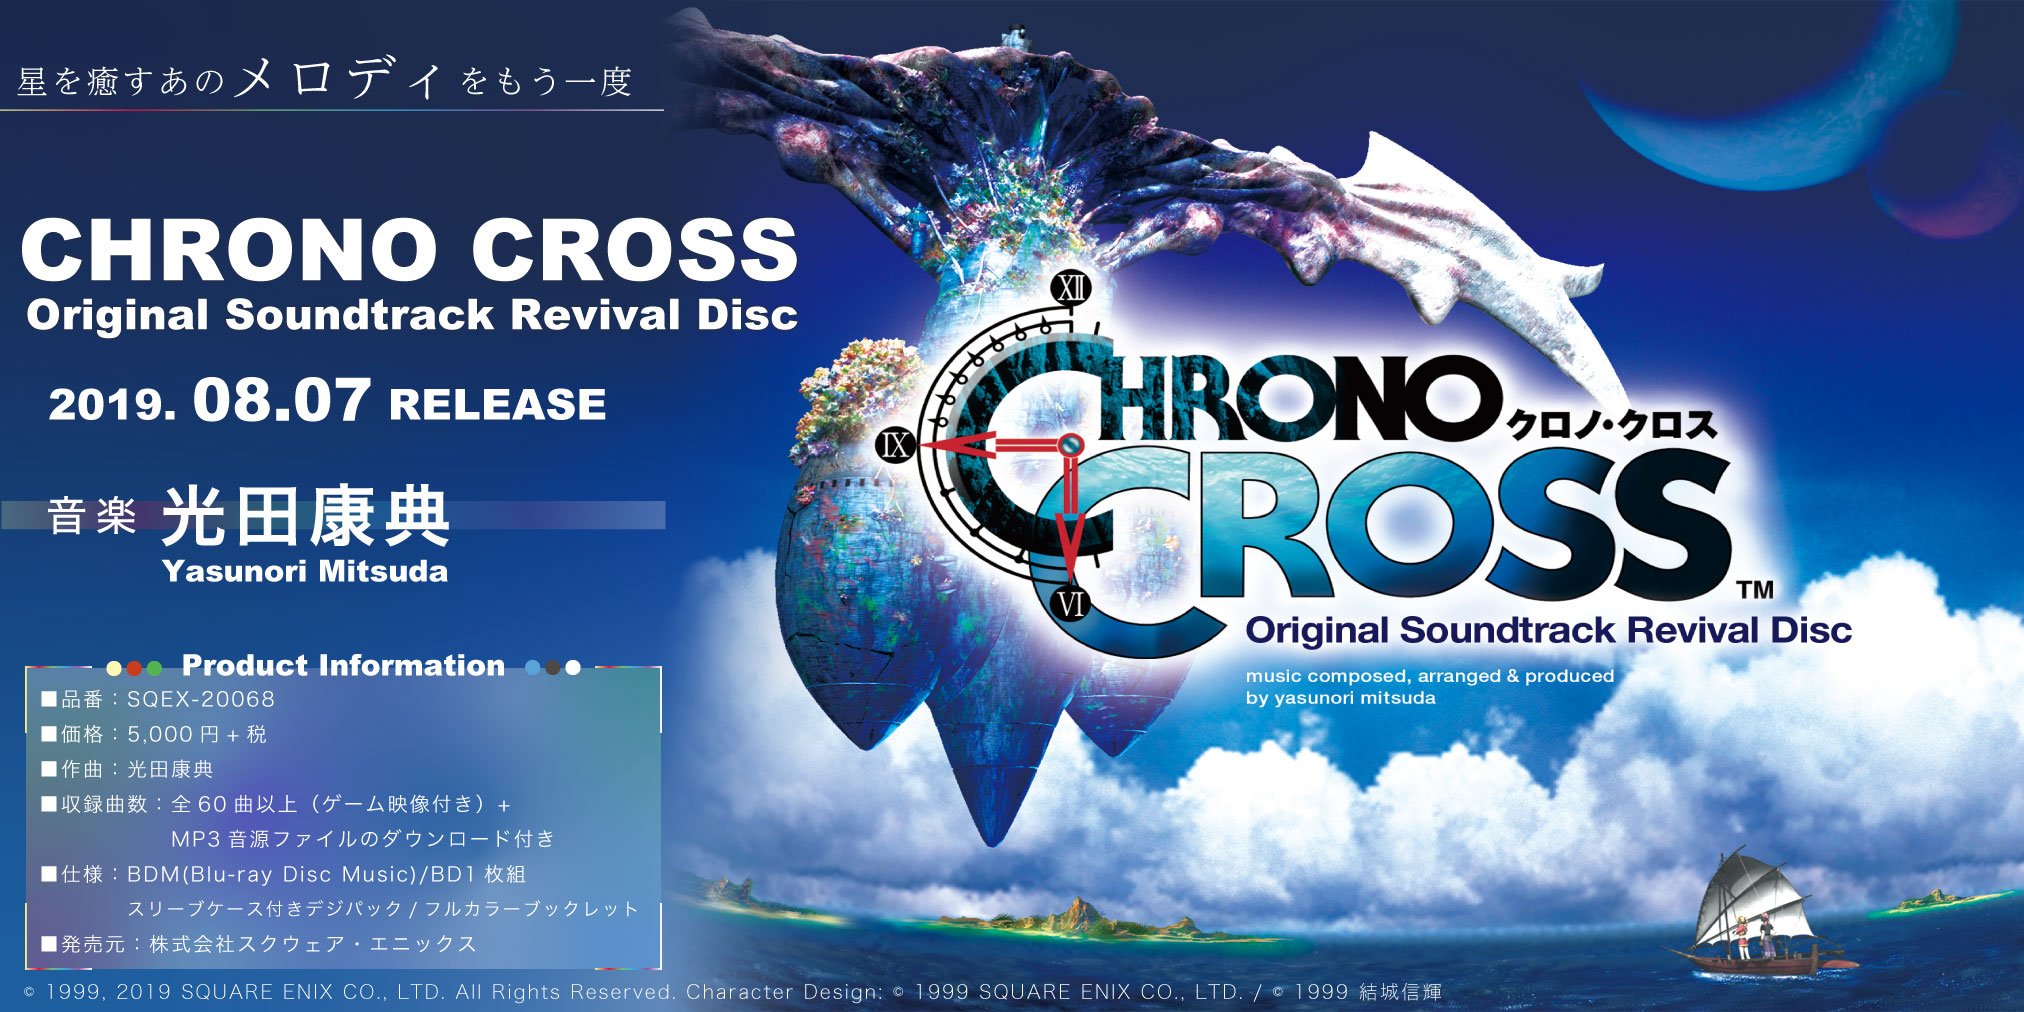 CHRONO CROSS Revival Disc